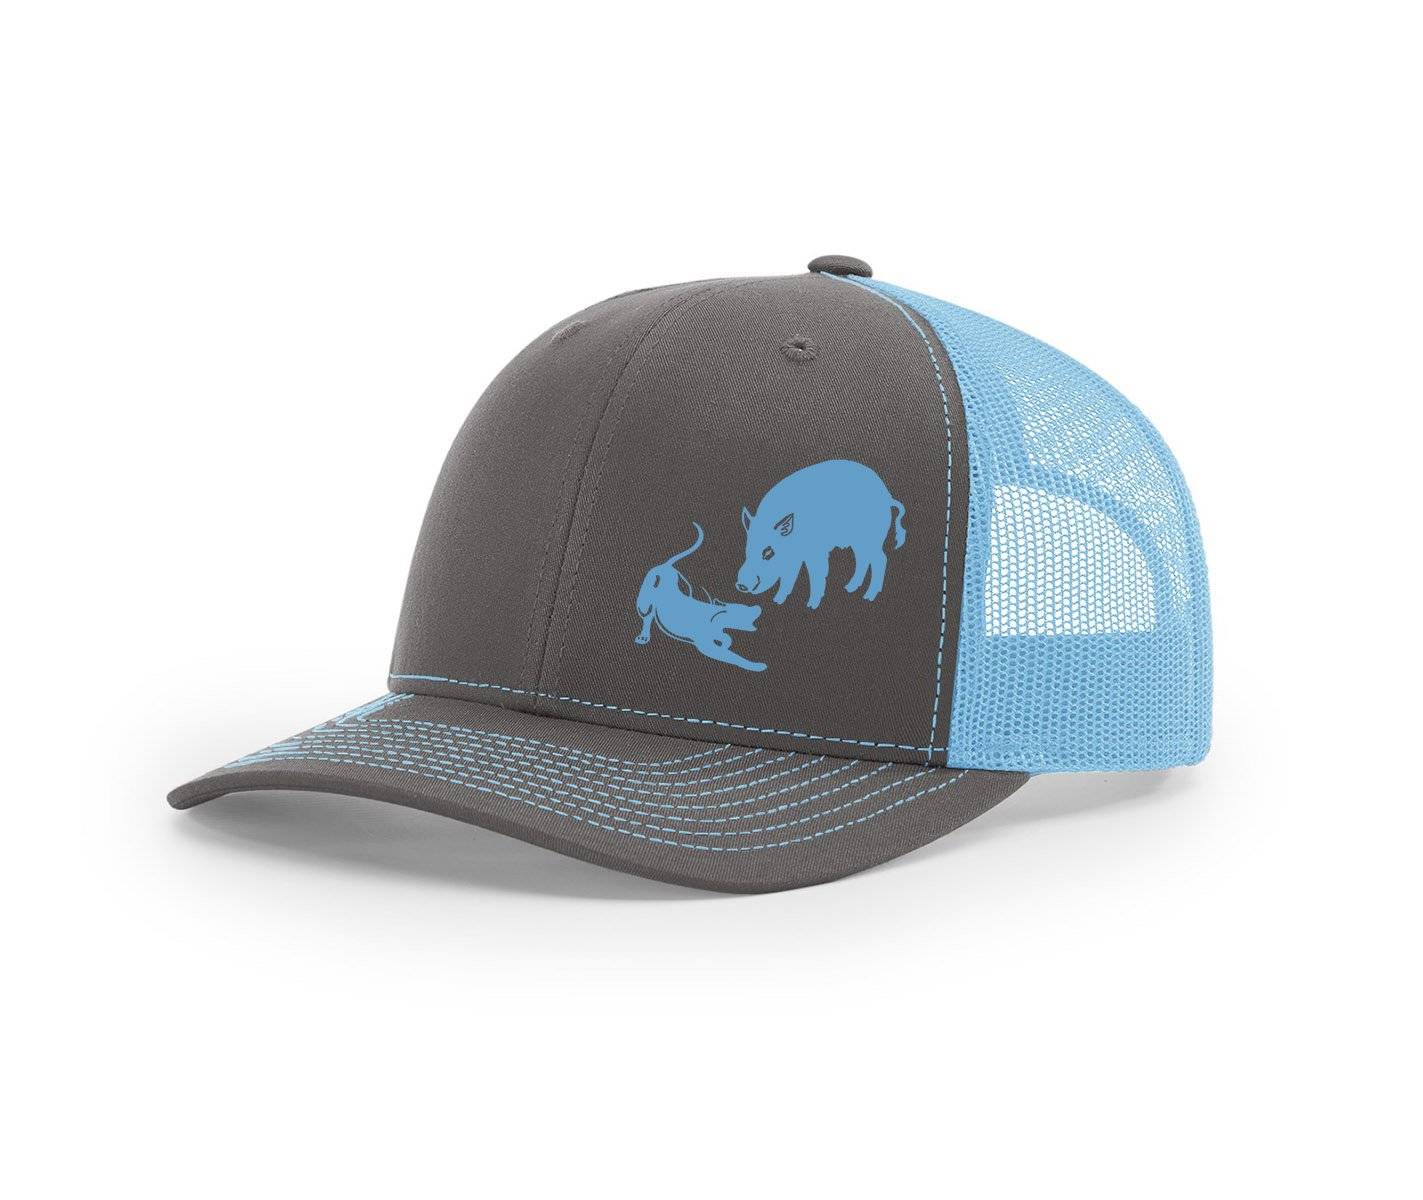 bayed Up Southern Houndsman Snapback Hat, Charcoal/Columbia Blue